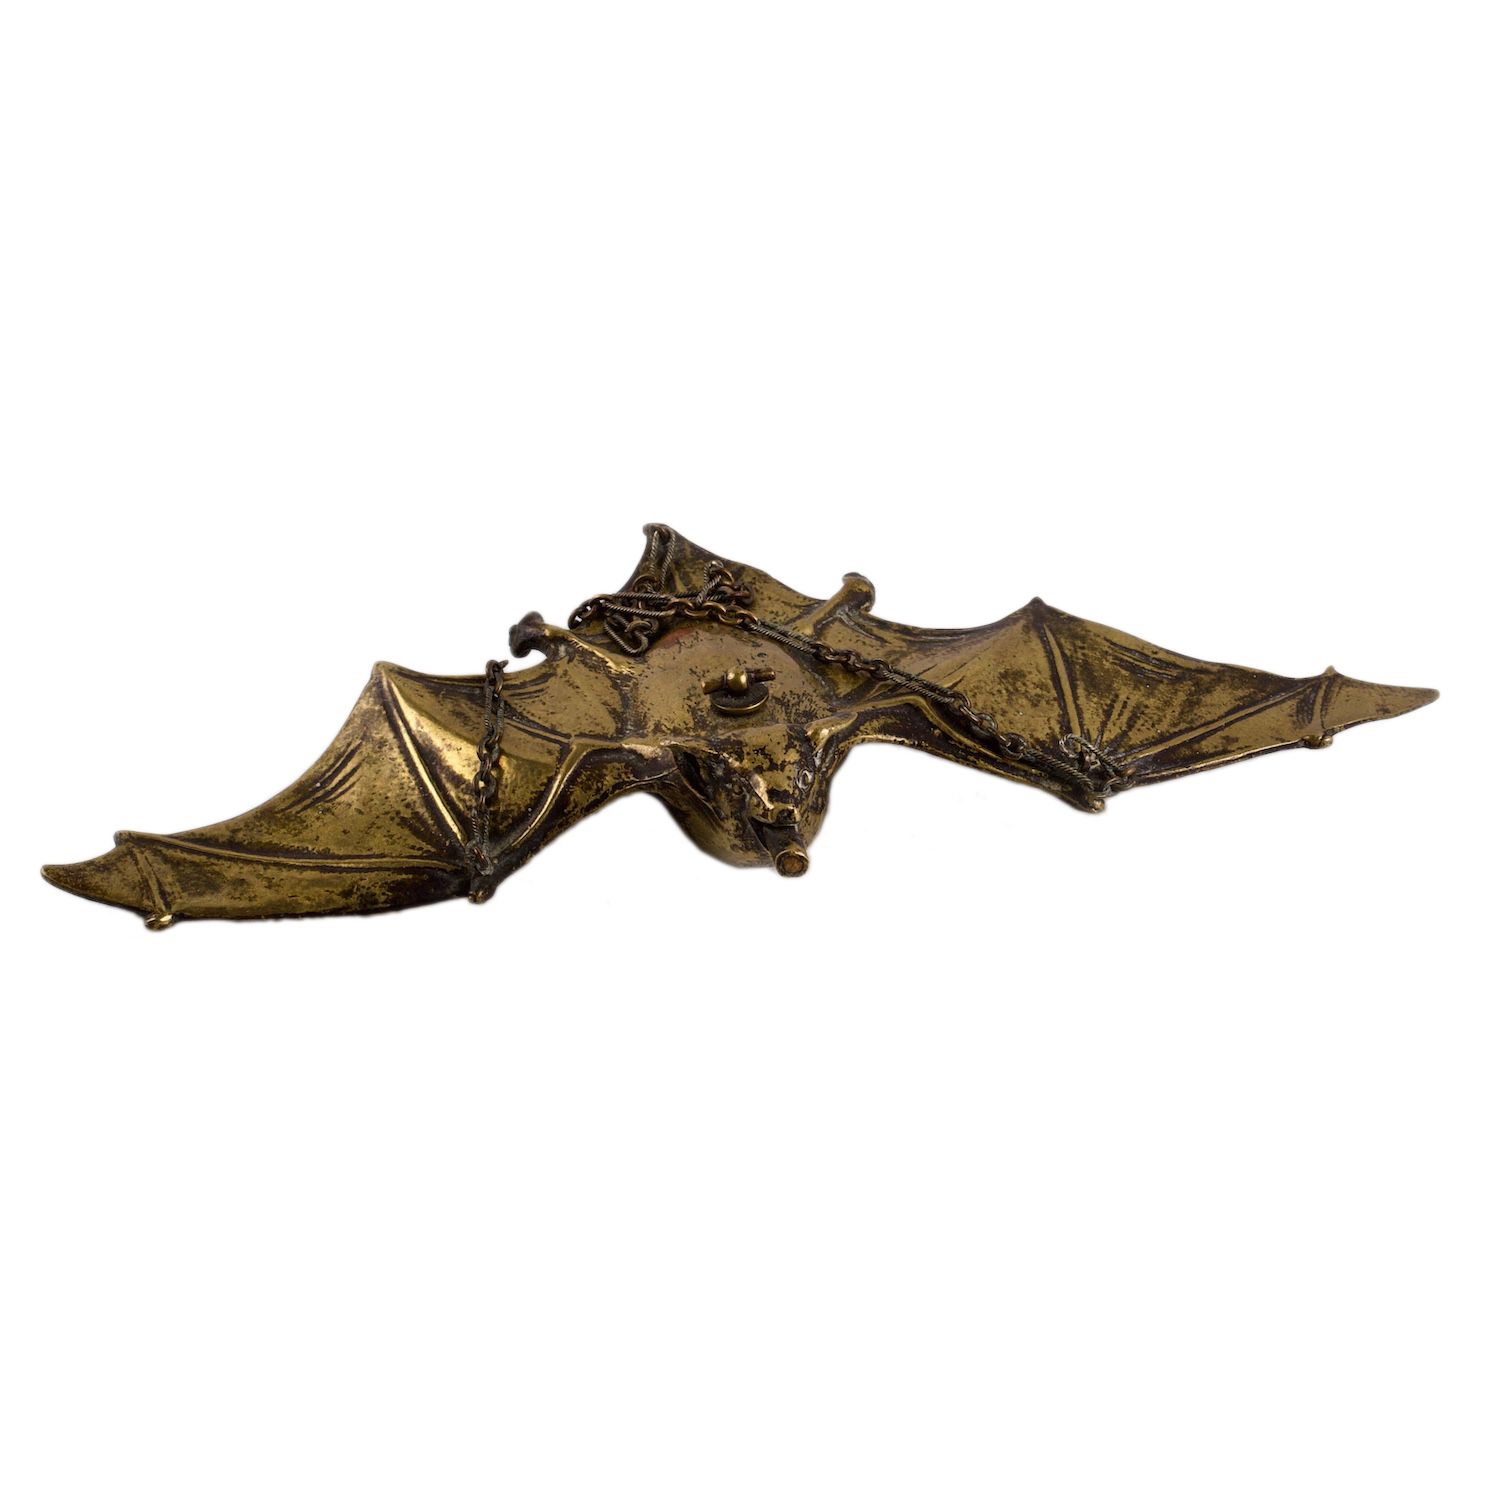 Null 蝙蝠形状的雪茄灯。青铜，镀金。俄罗斯，20世纪初。尺寸：21.5 x 9.5厘米。